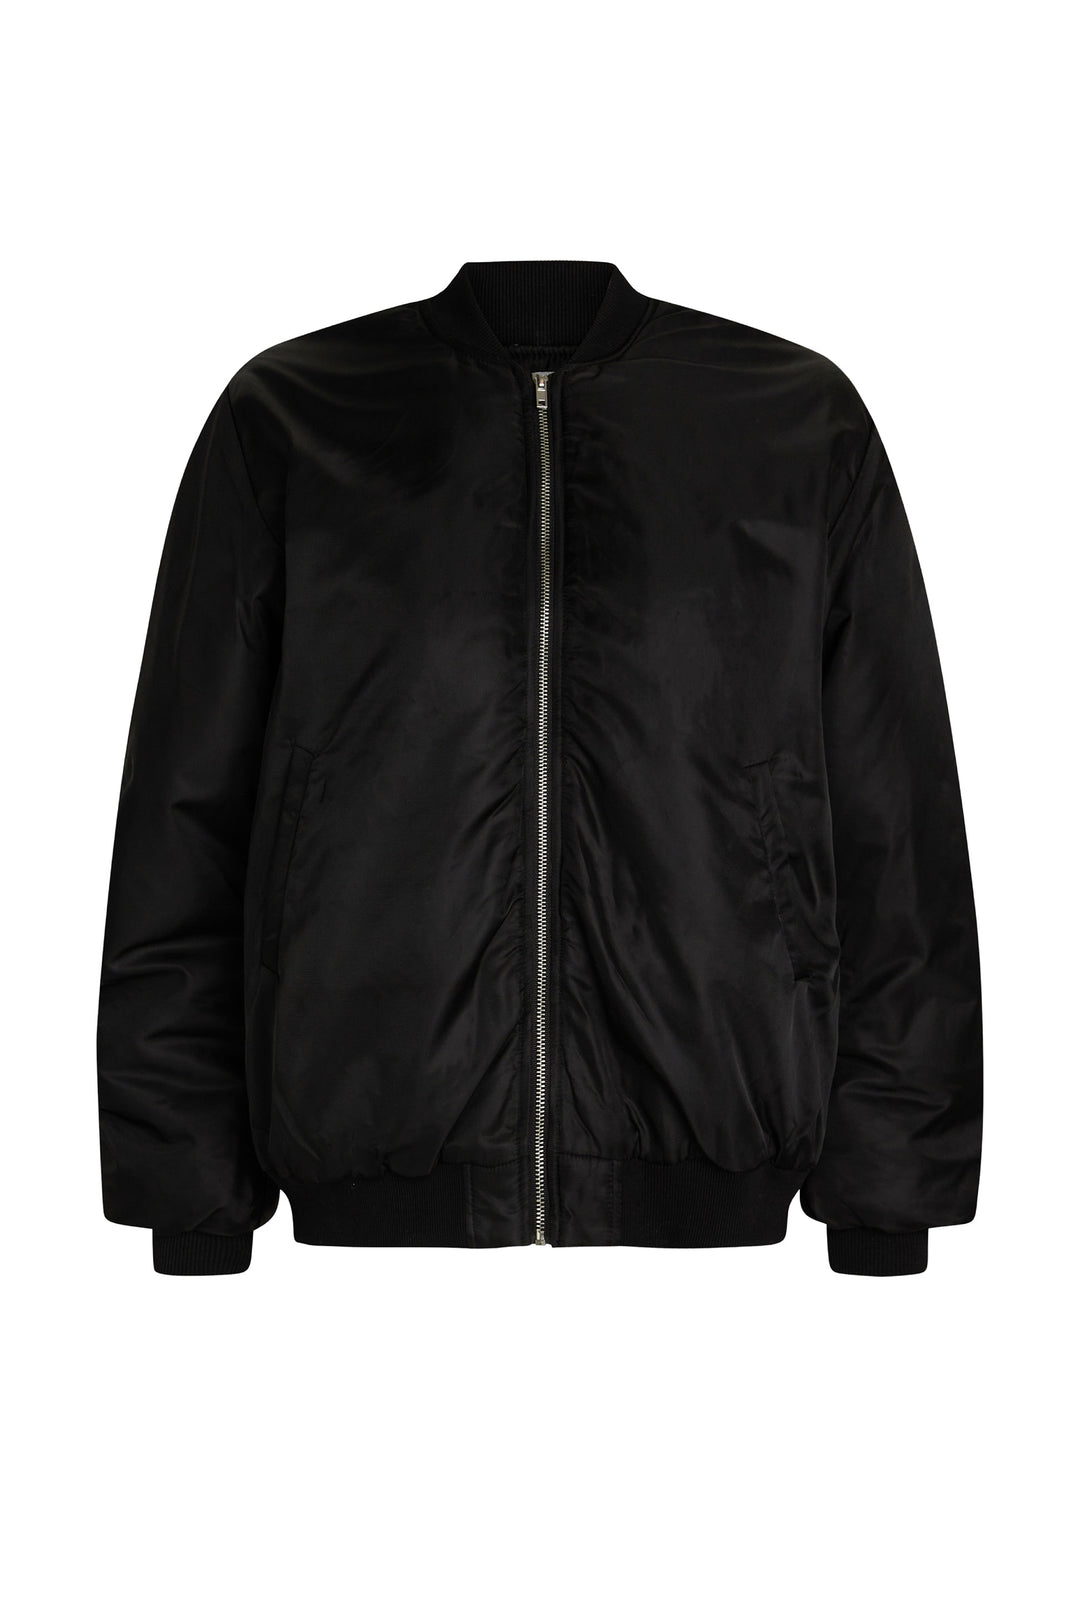 BZR MontanaBZBomber jacket Outerwear Black